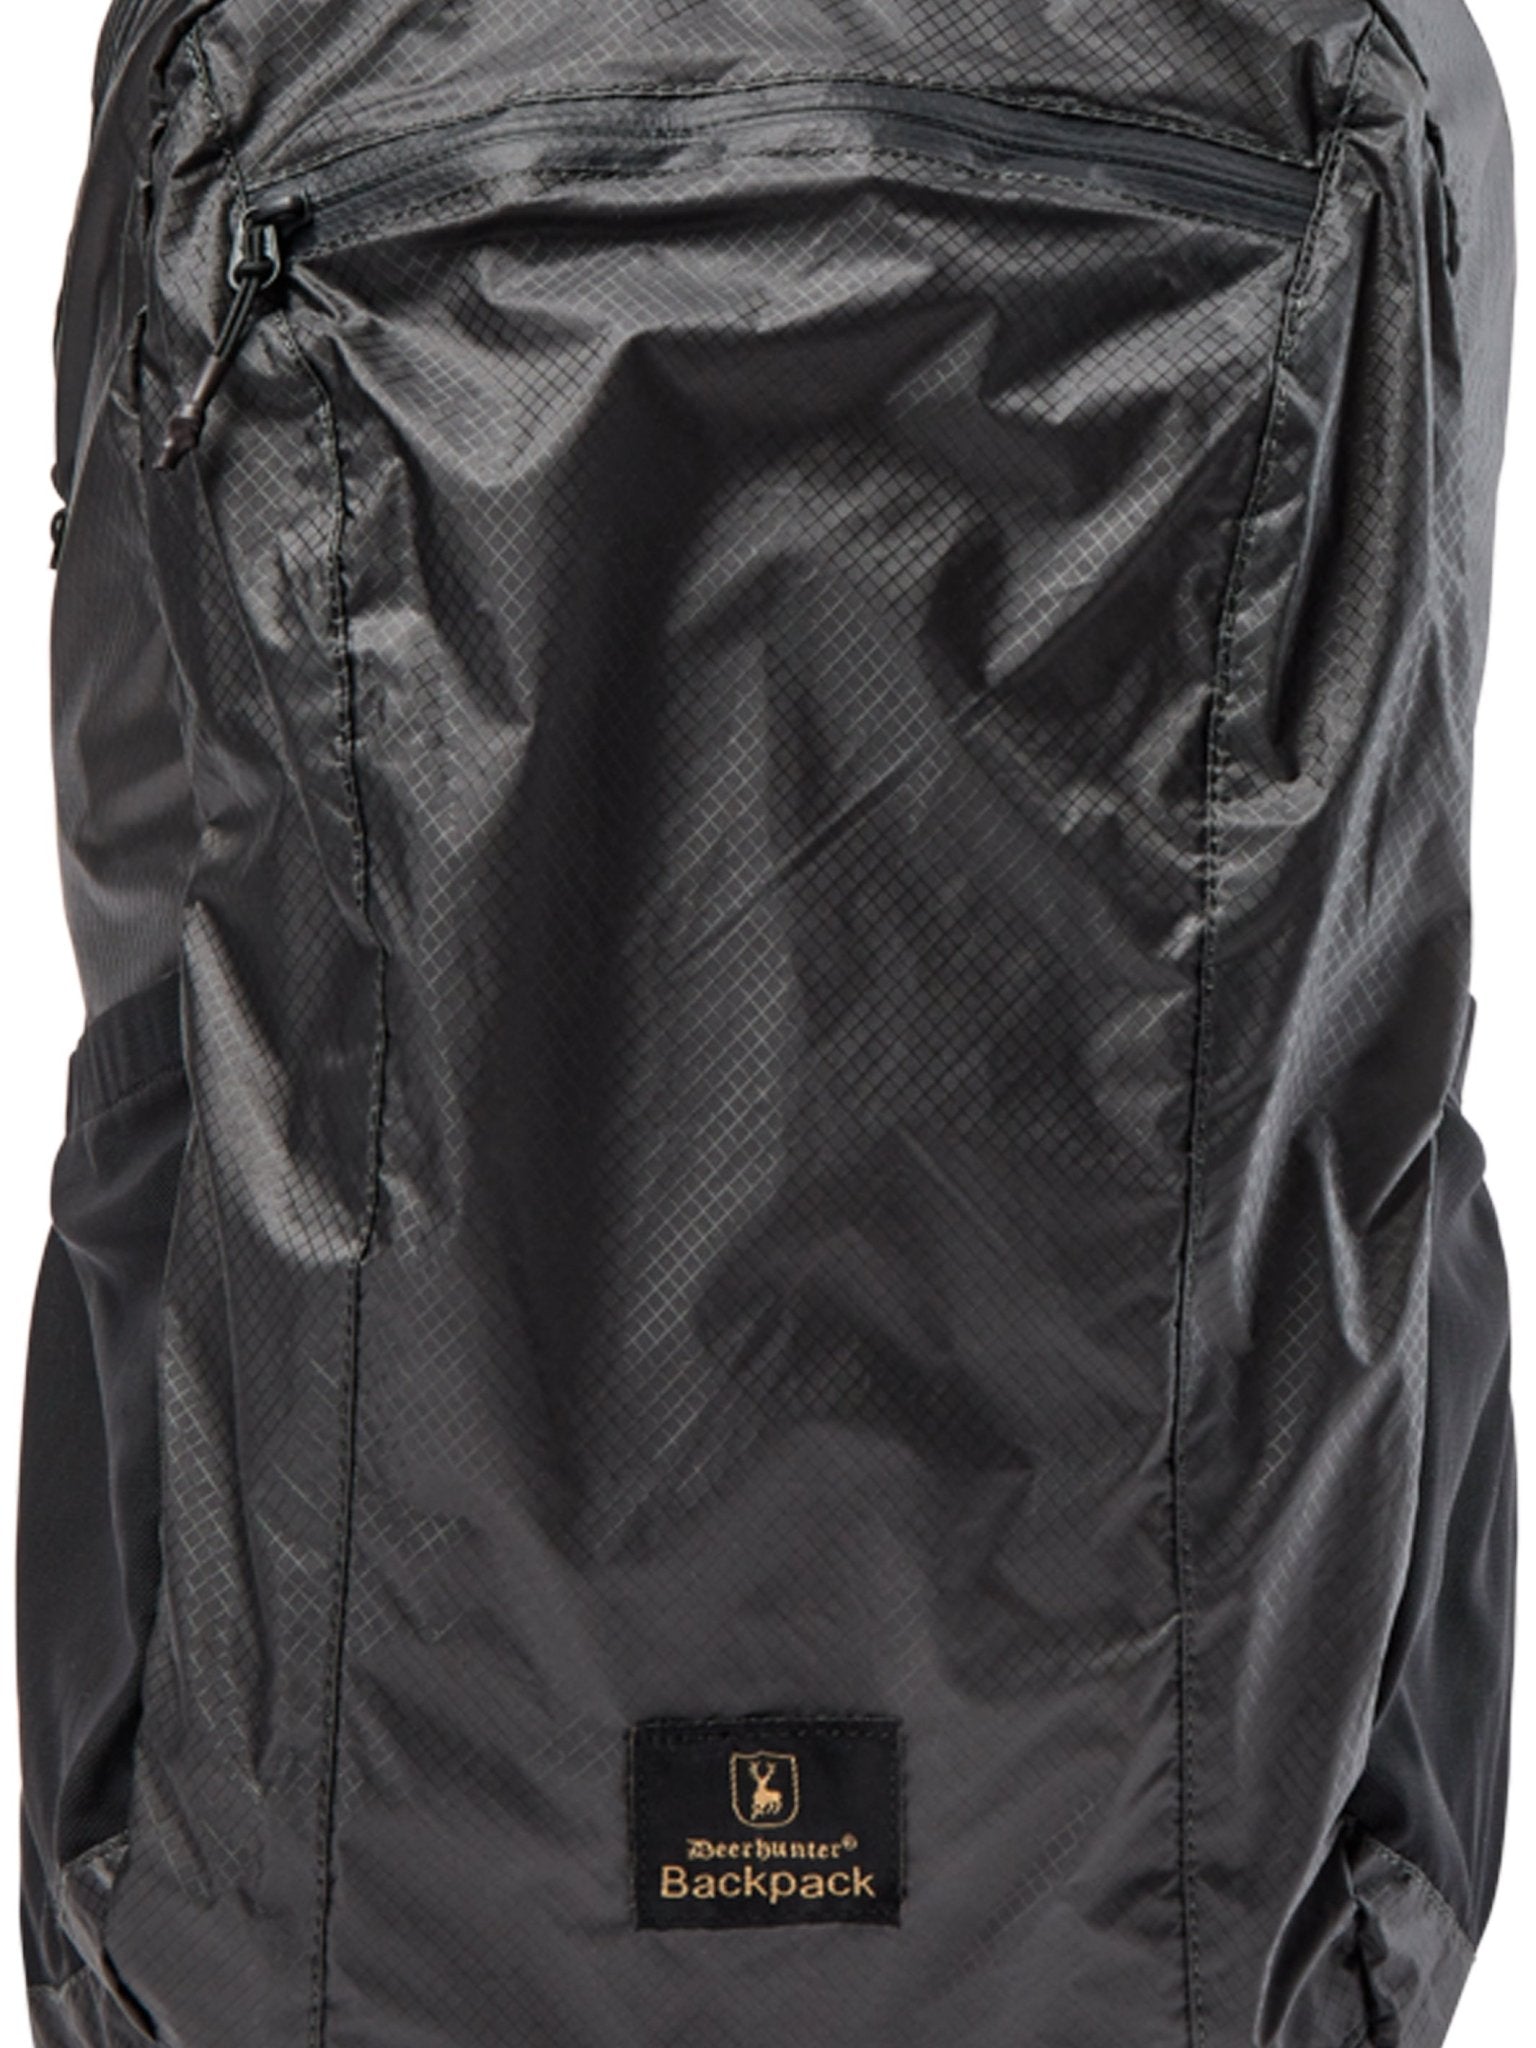 4elementsclothingDeerhunterDeerhunter - Packable Backpack / Rucksack Bag 24 Litre / Lightweight water Repellent 24LBagSO2 9025-999-24